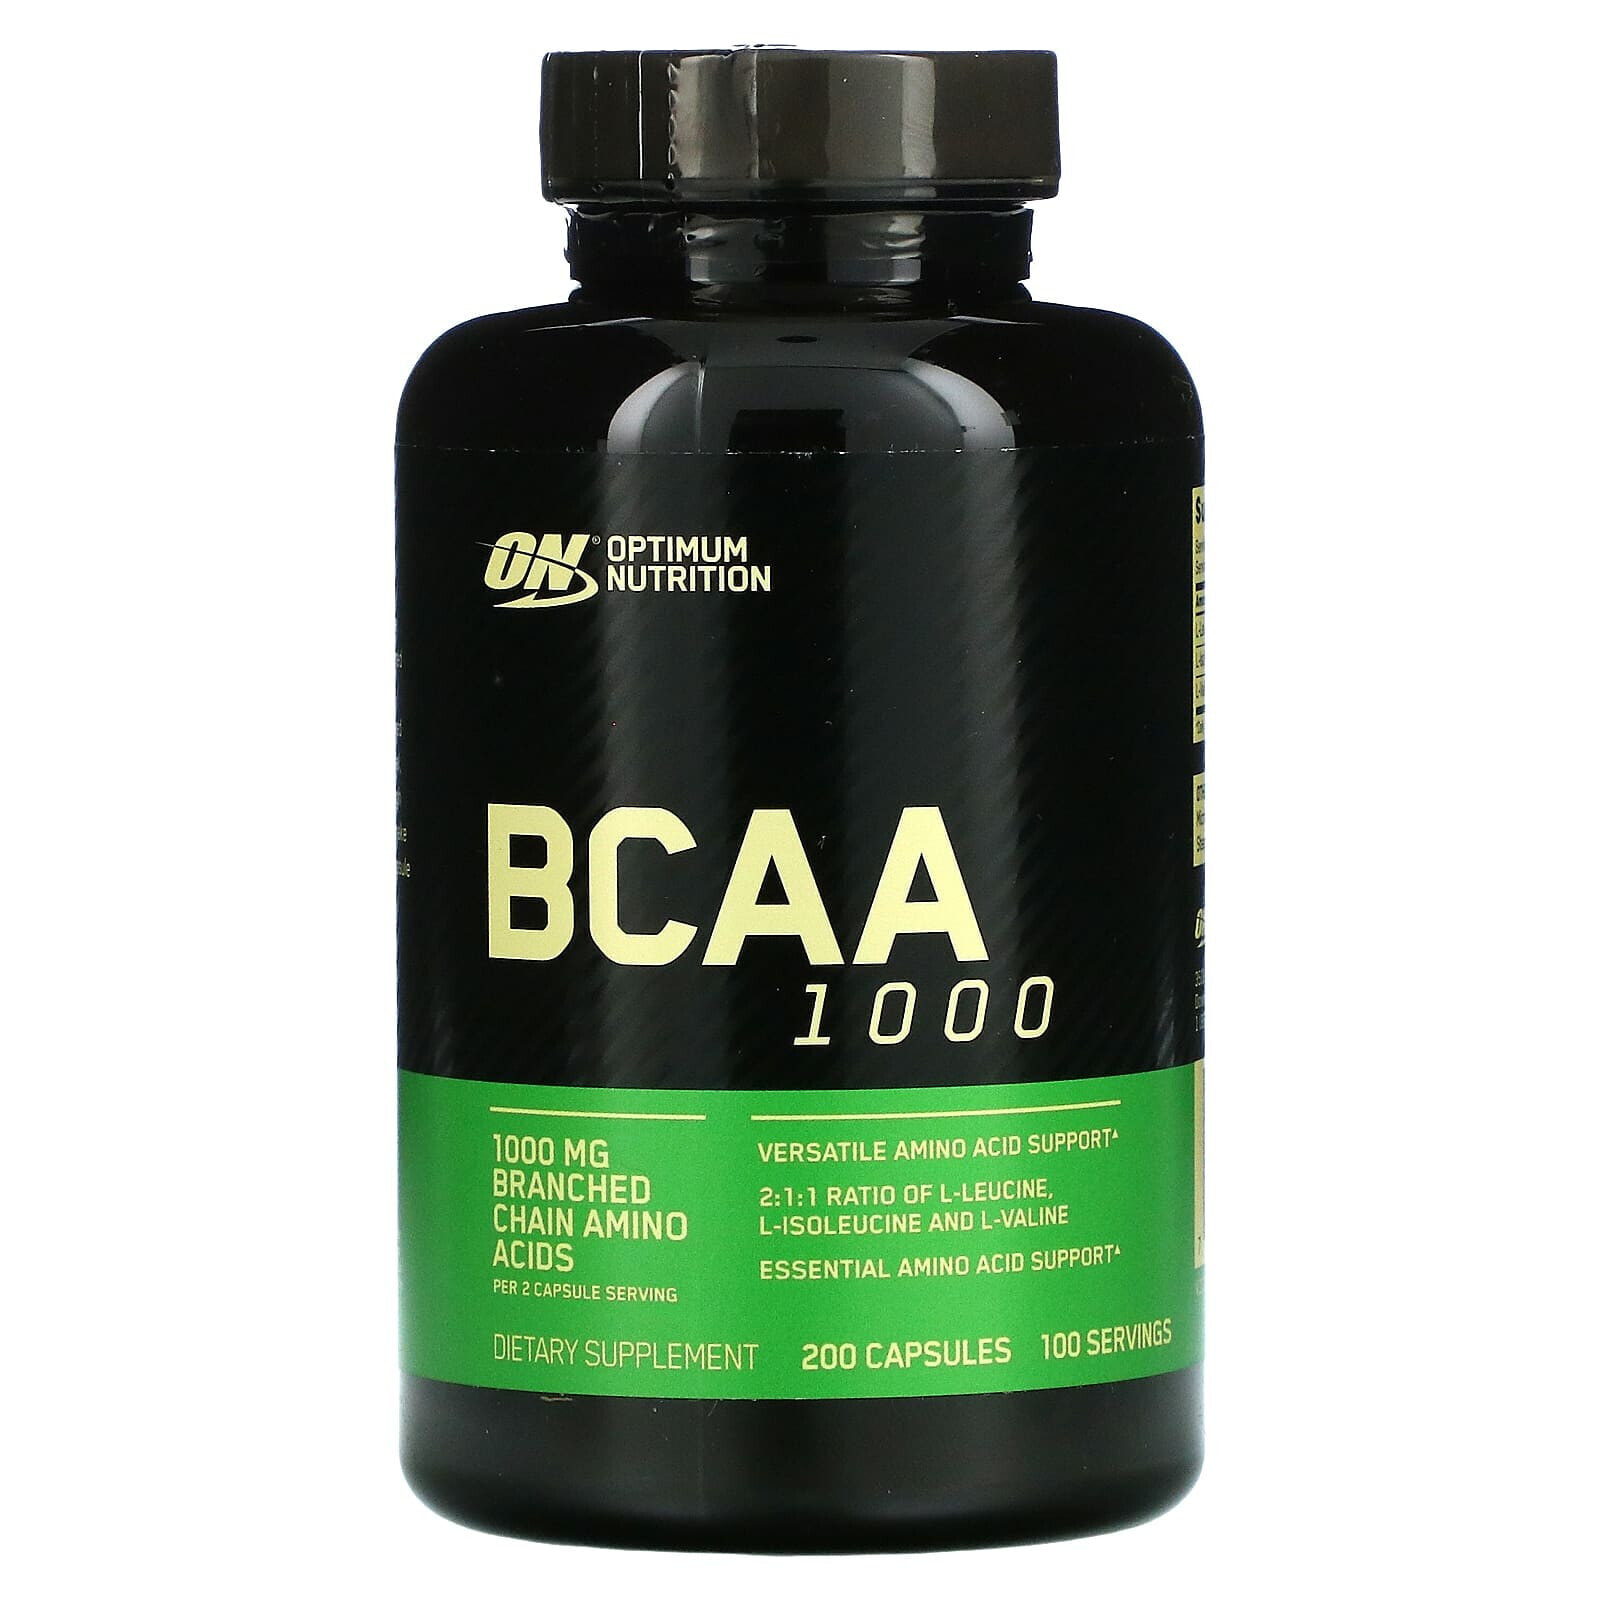 BCAA 1000, 1,000 mg, 200 Capsules (500 mg per Capsule)